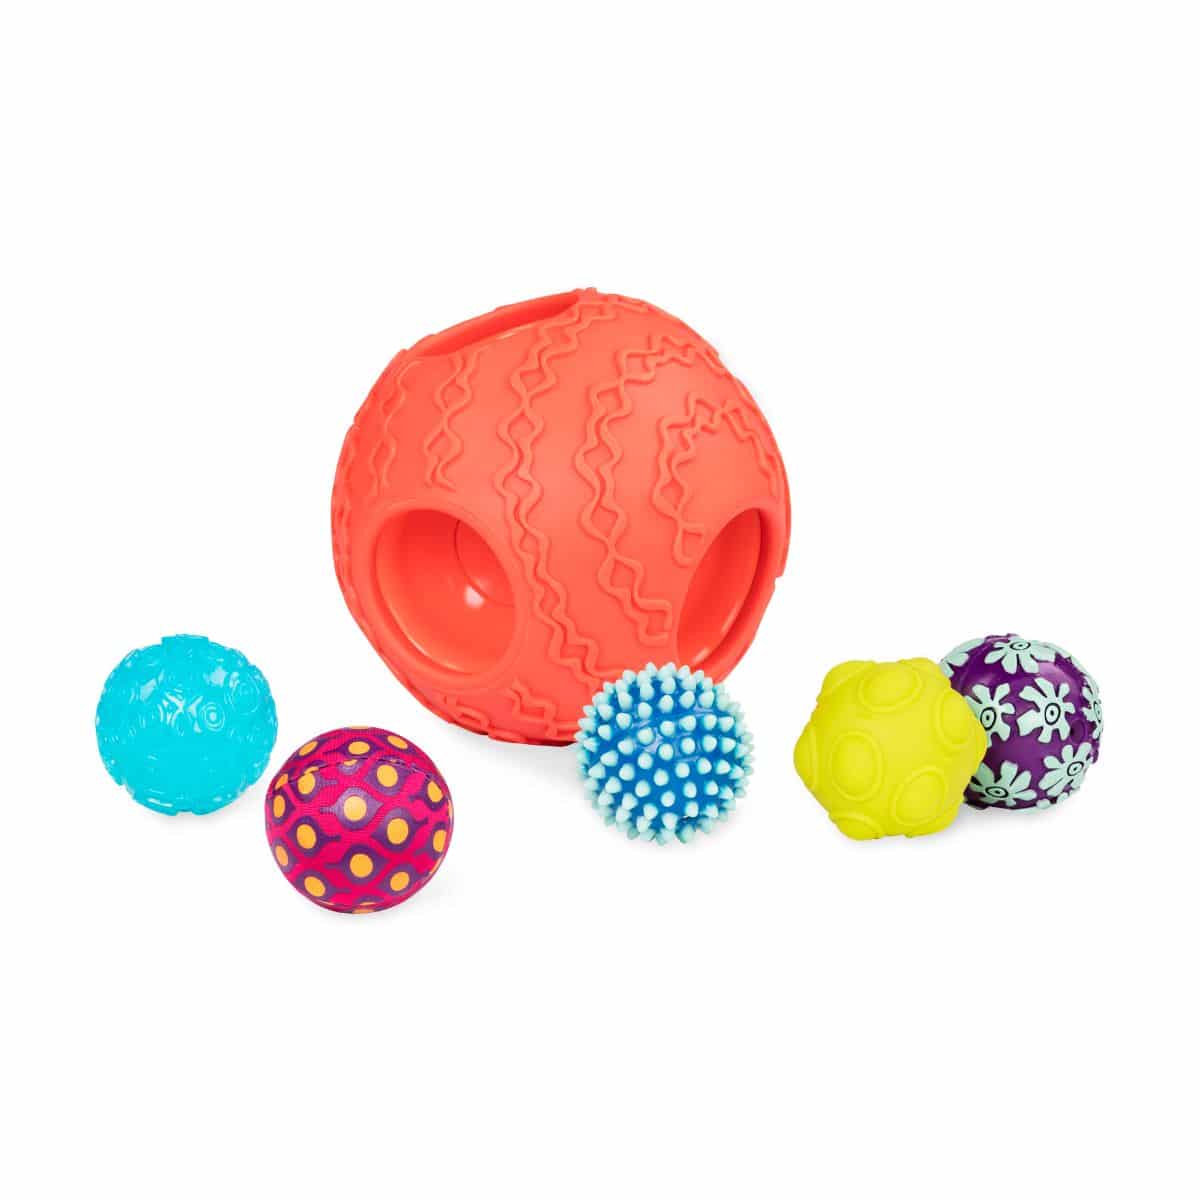 Sensory toy balls.